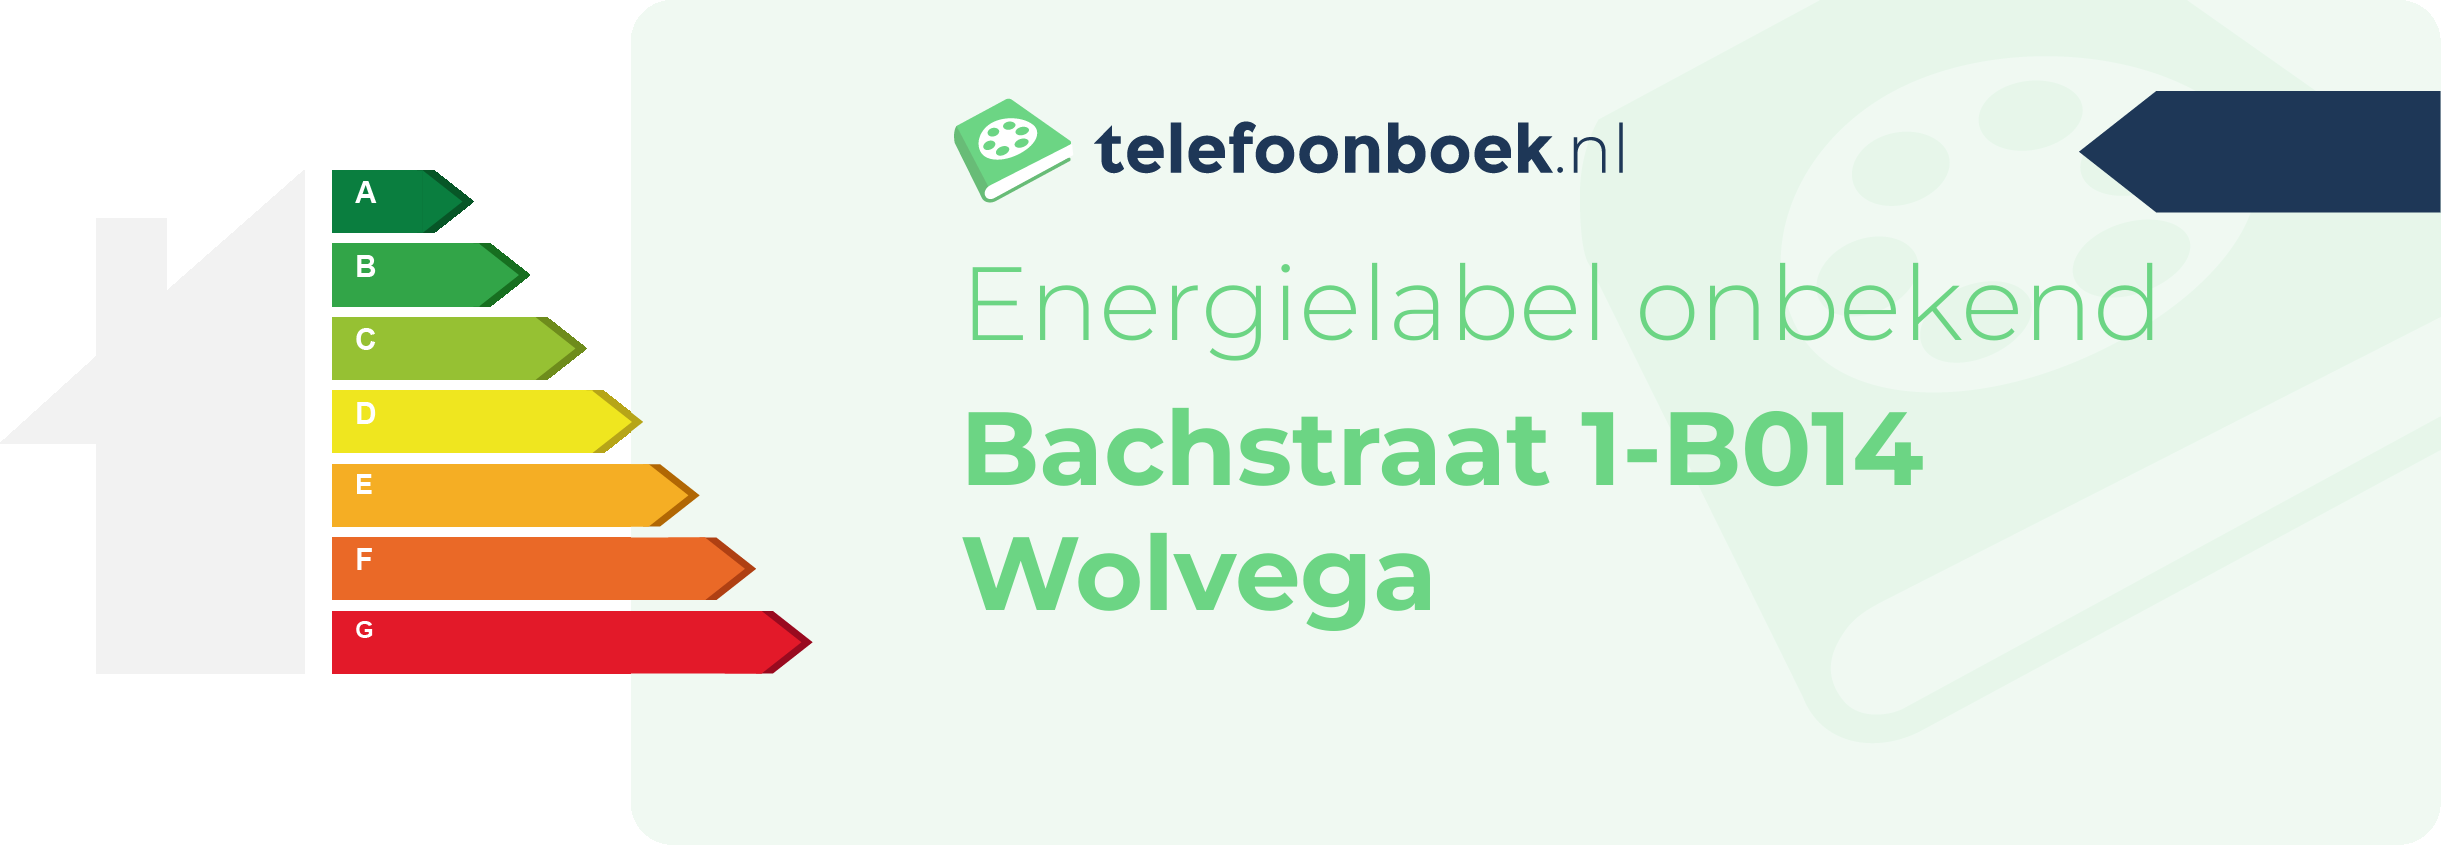 Energielabel Bachstraat 1-B014 Wolvega